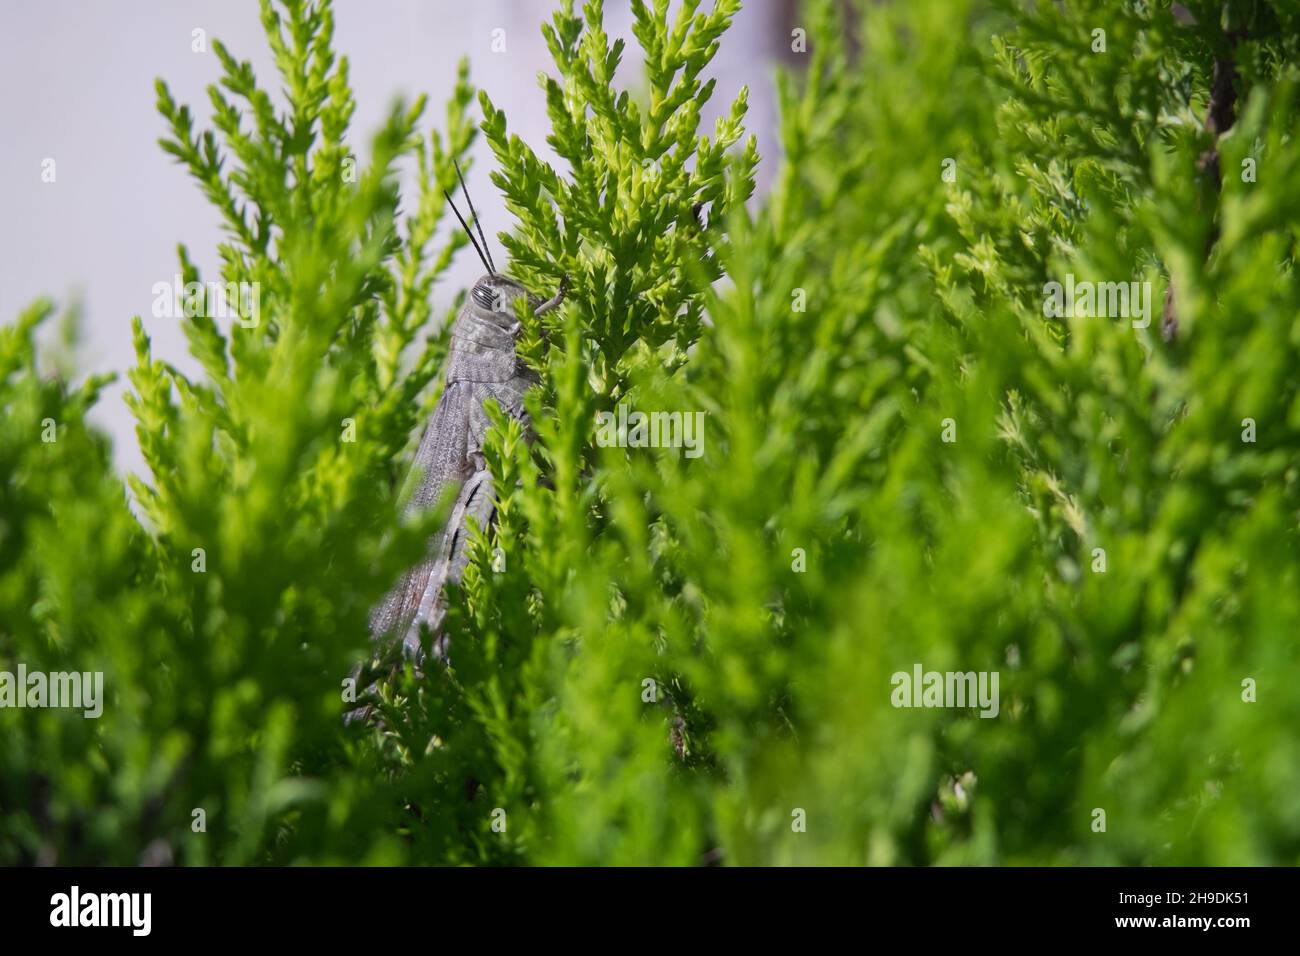 A big grey grasshopper in green foliage Stock Photo